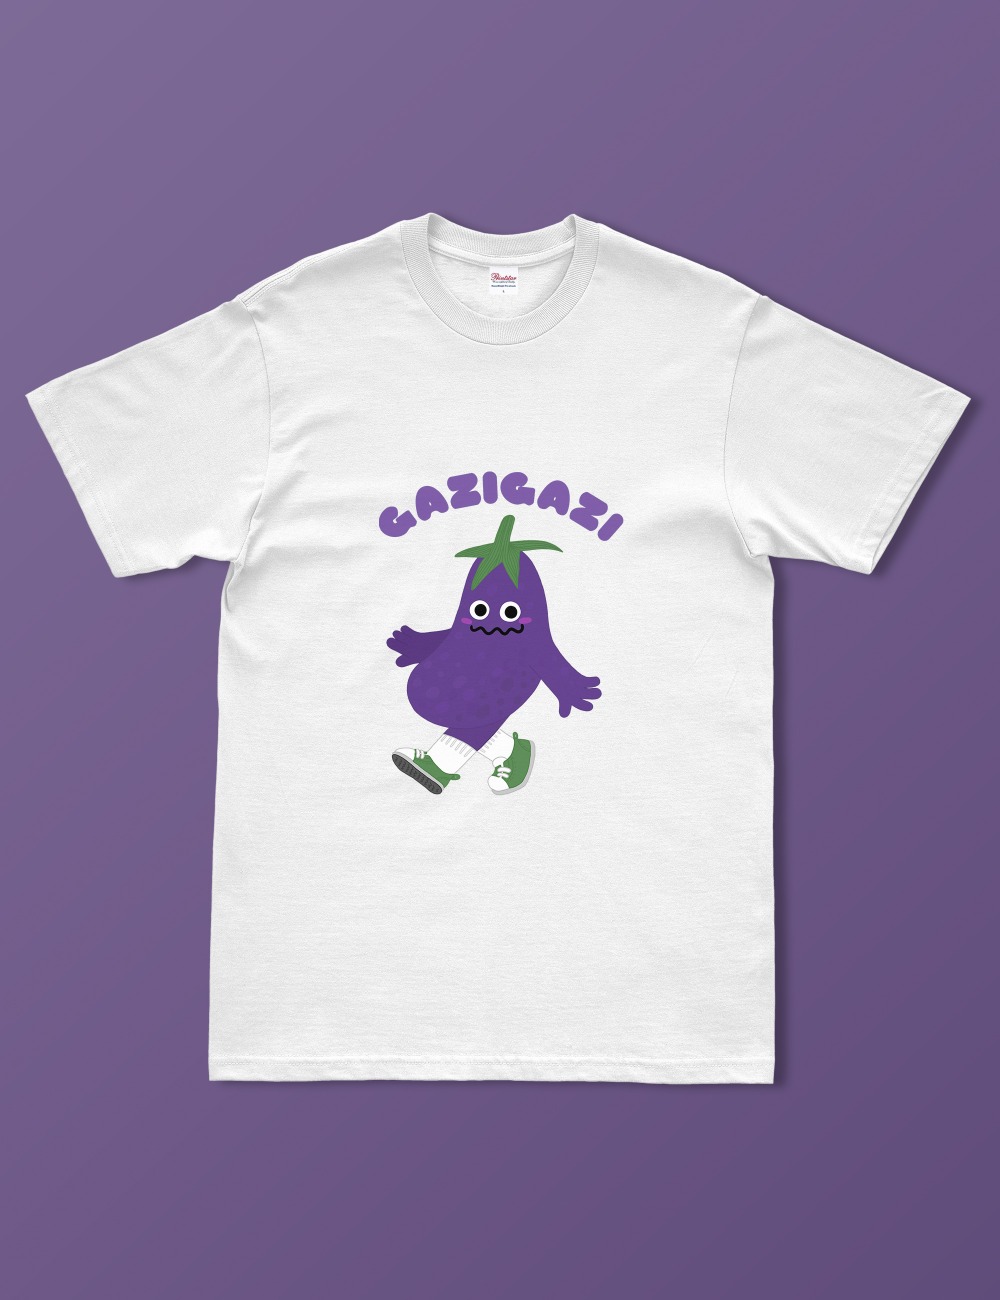 gazigazi half t-shirt